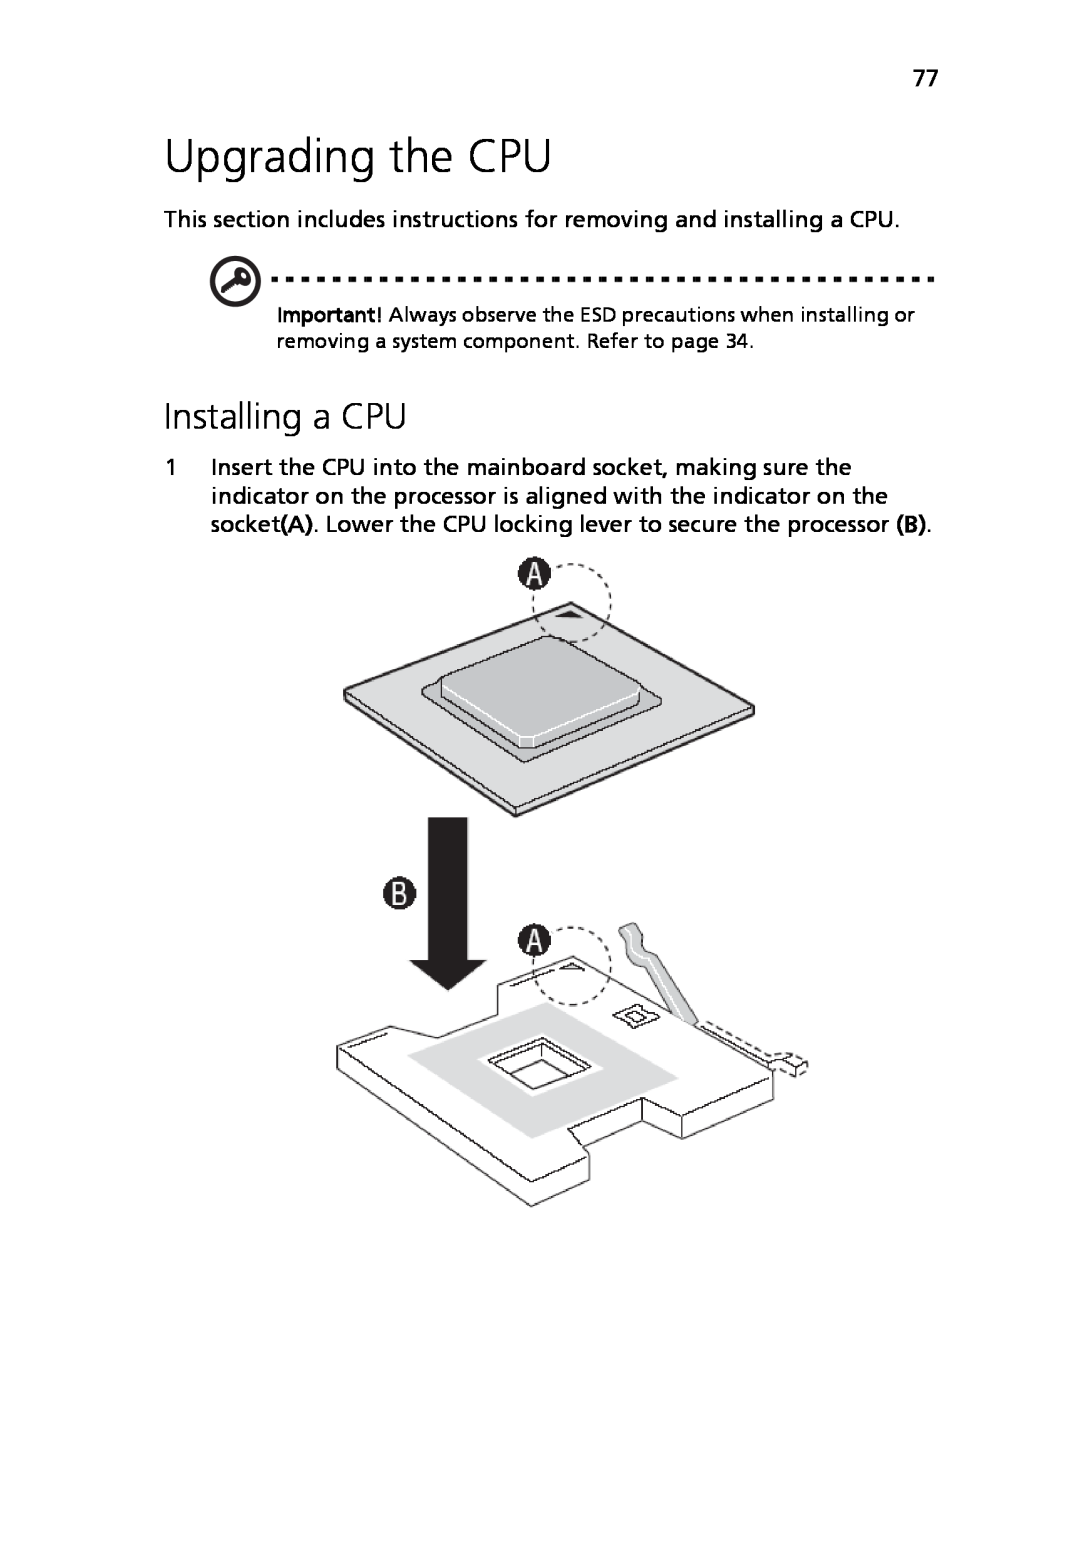 Acer Altos R710 manual Upgrading the CPU, Installing a CPU 